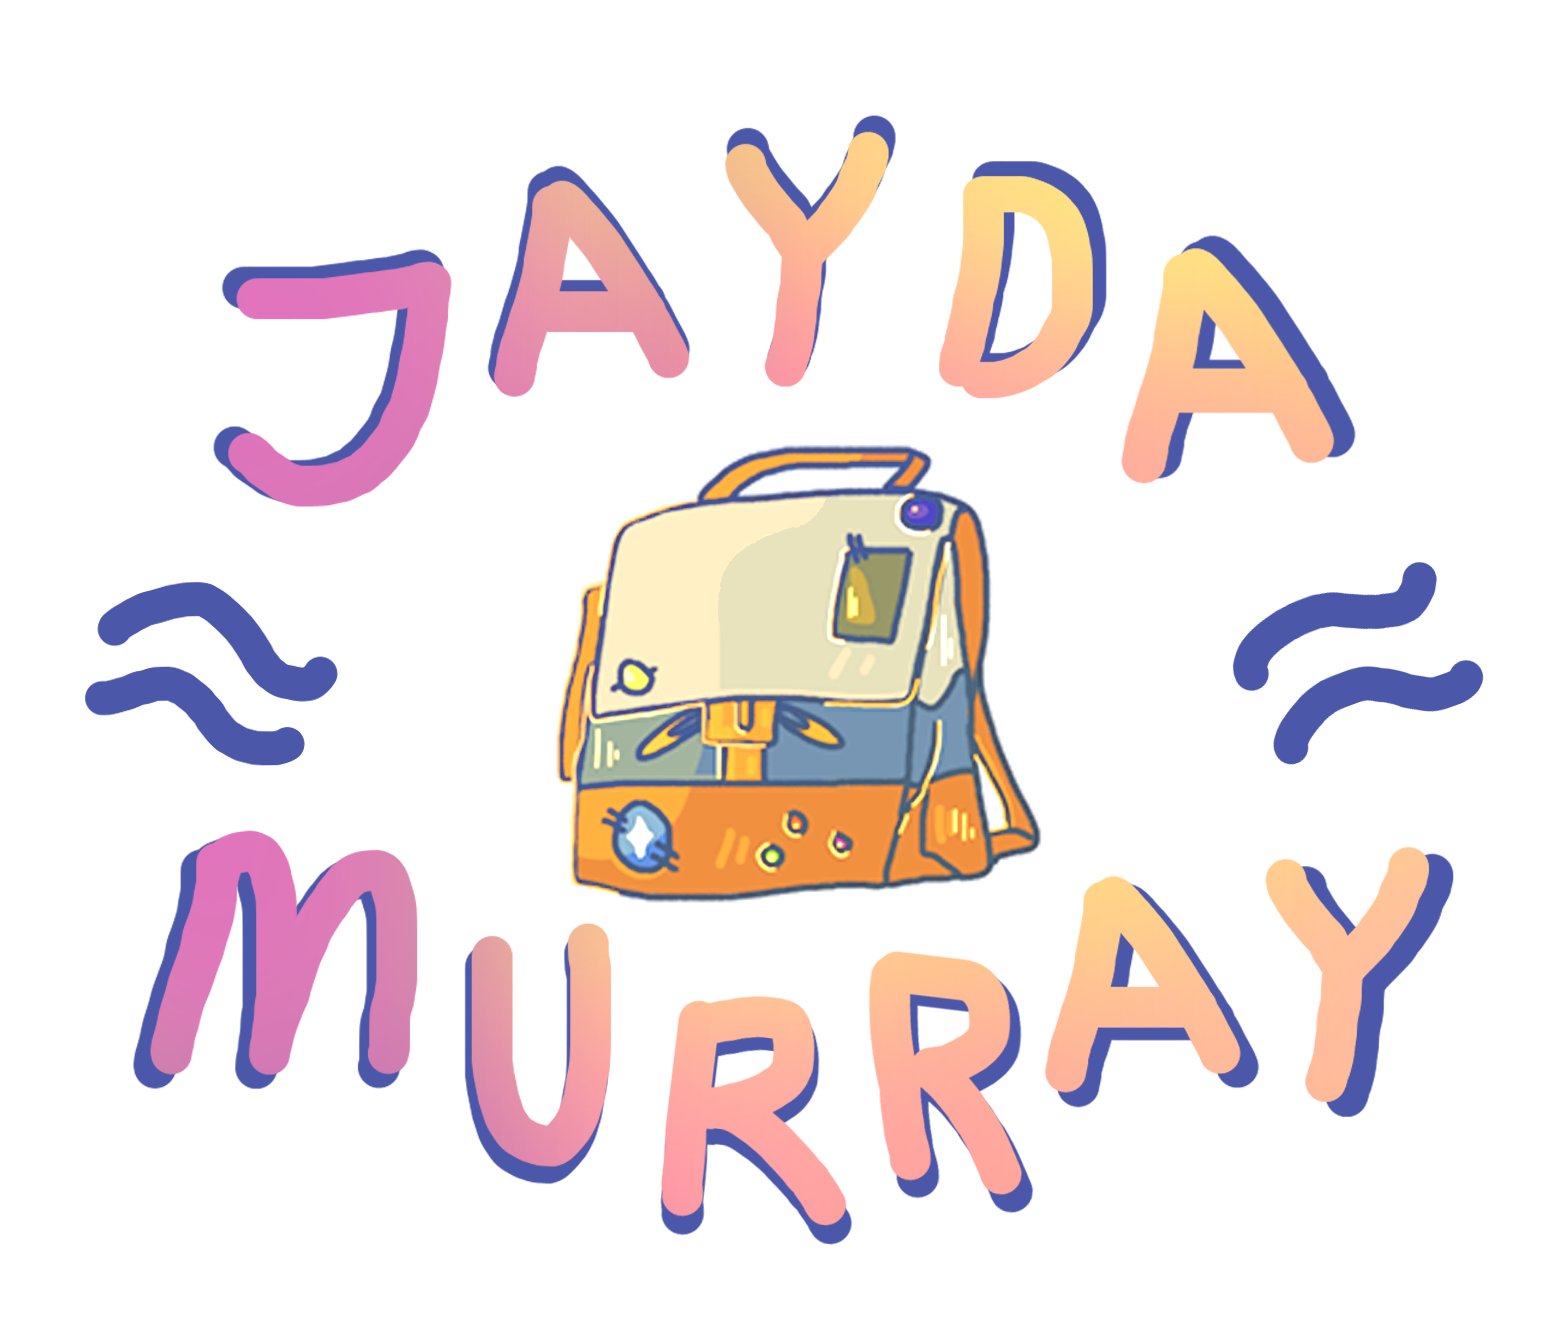 Jayda Murray